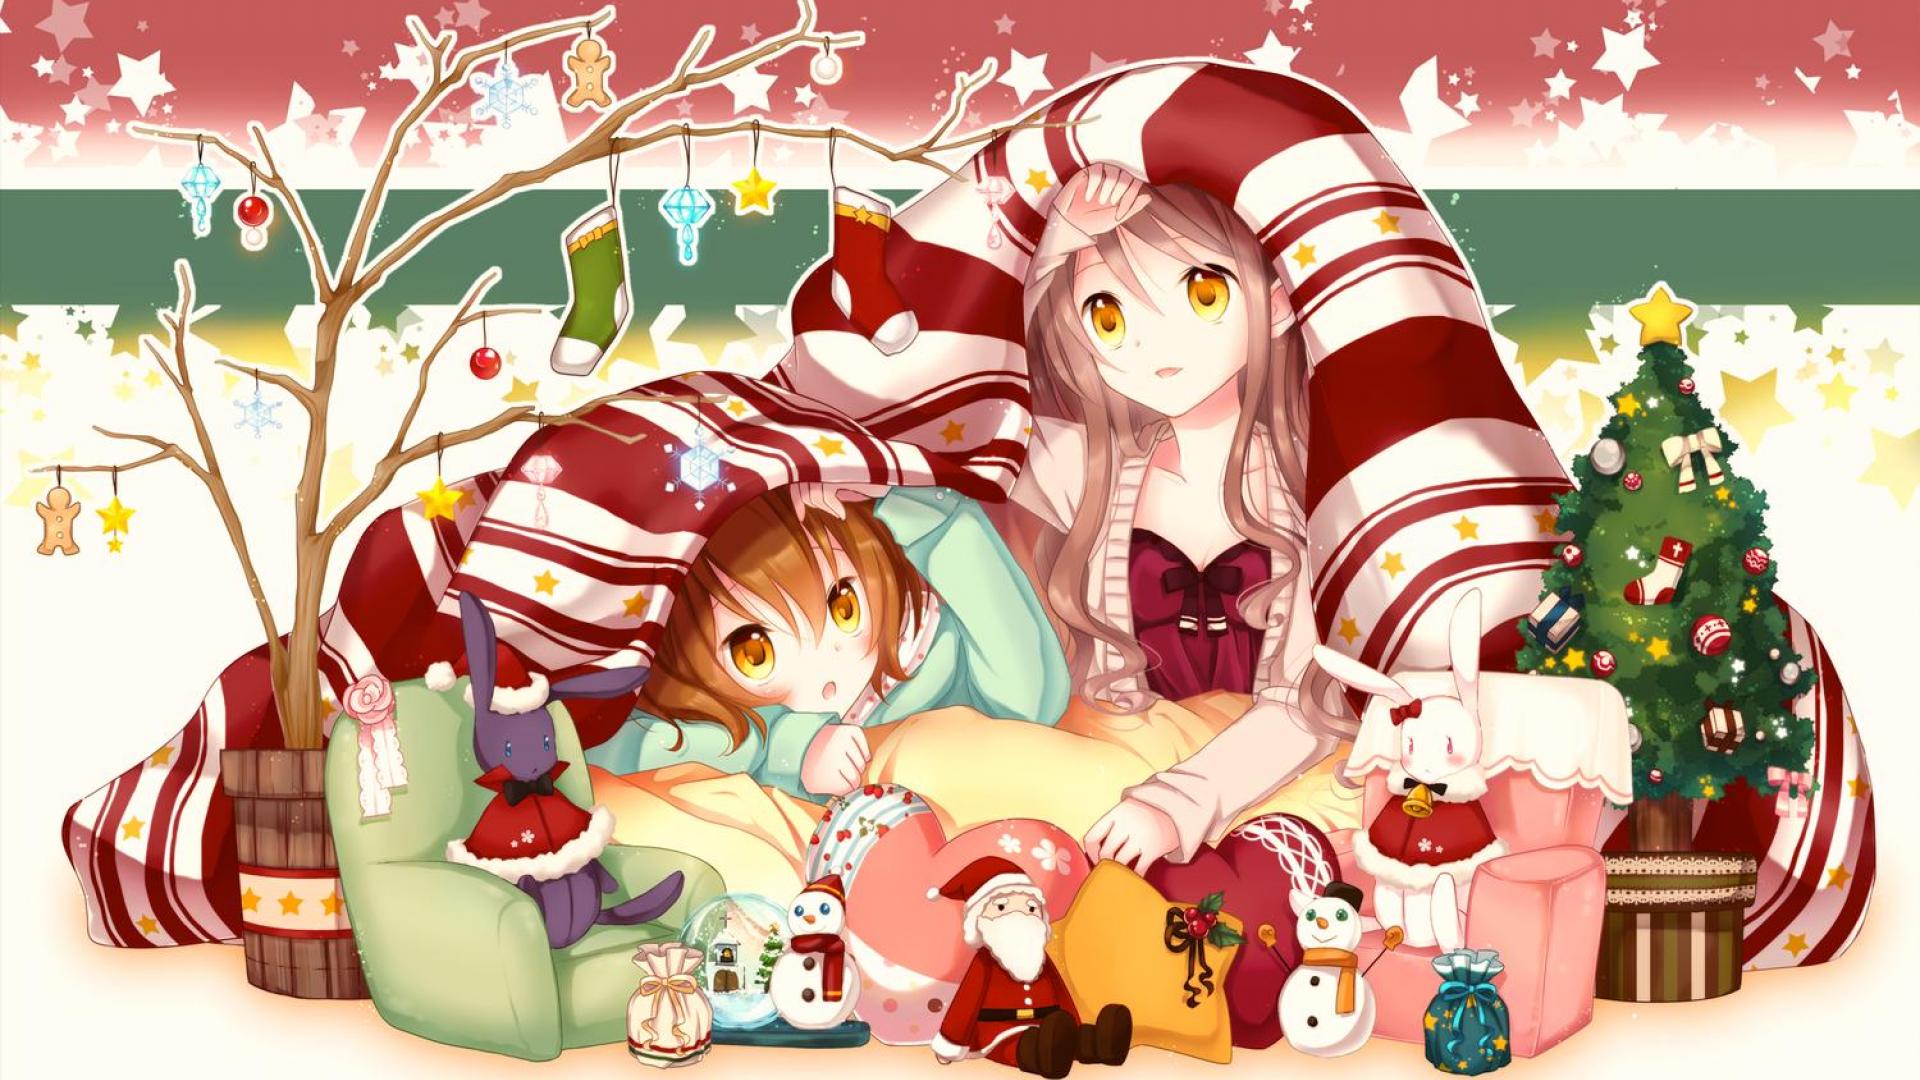 Anime Christmas Background 3.0 by ItzIBlueBear on DeviantArt